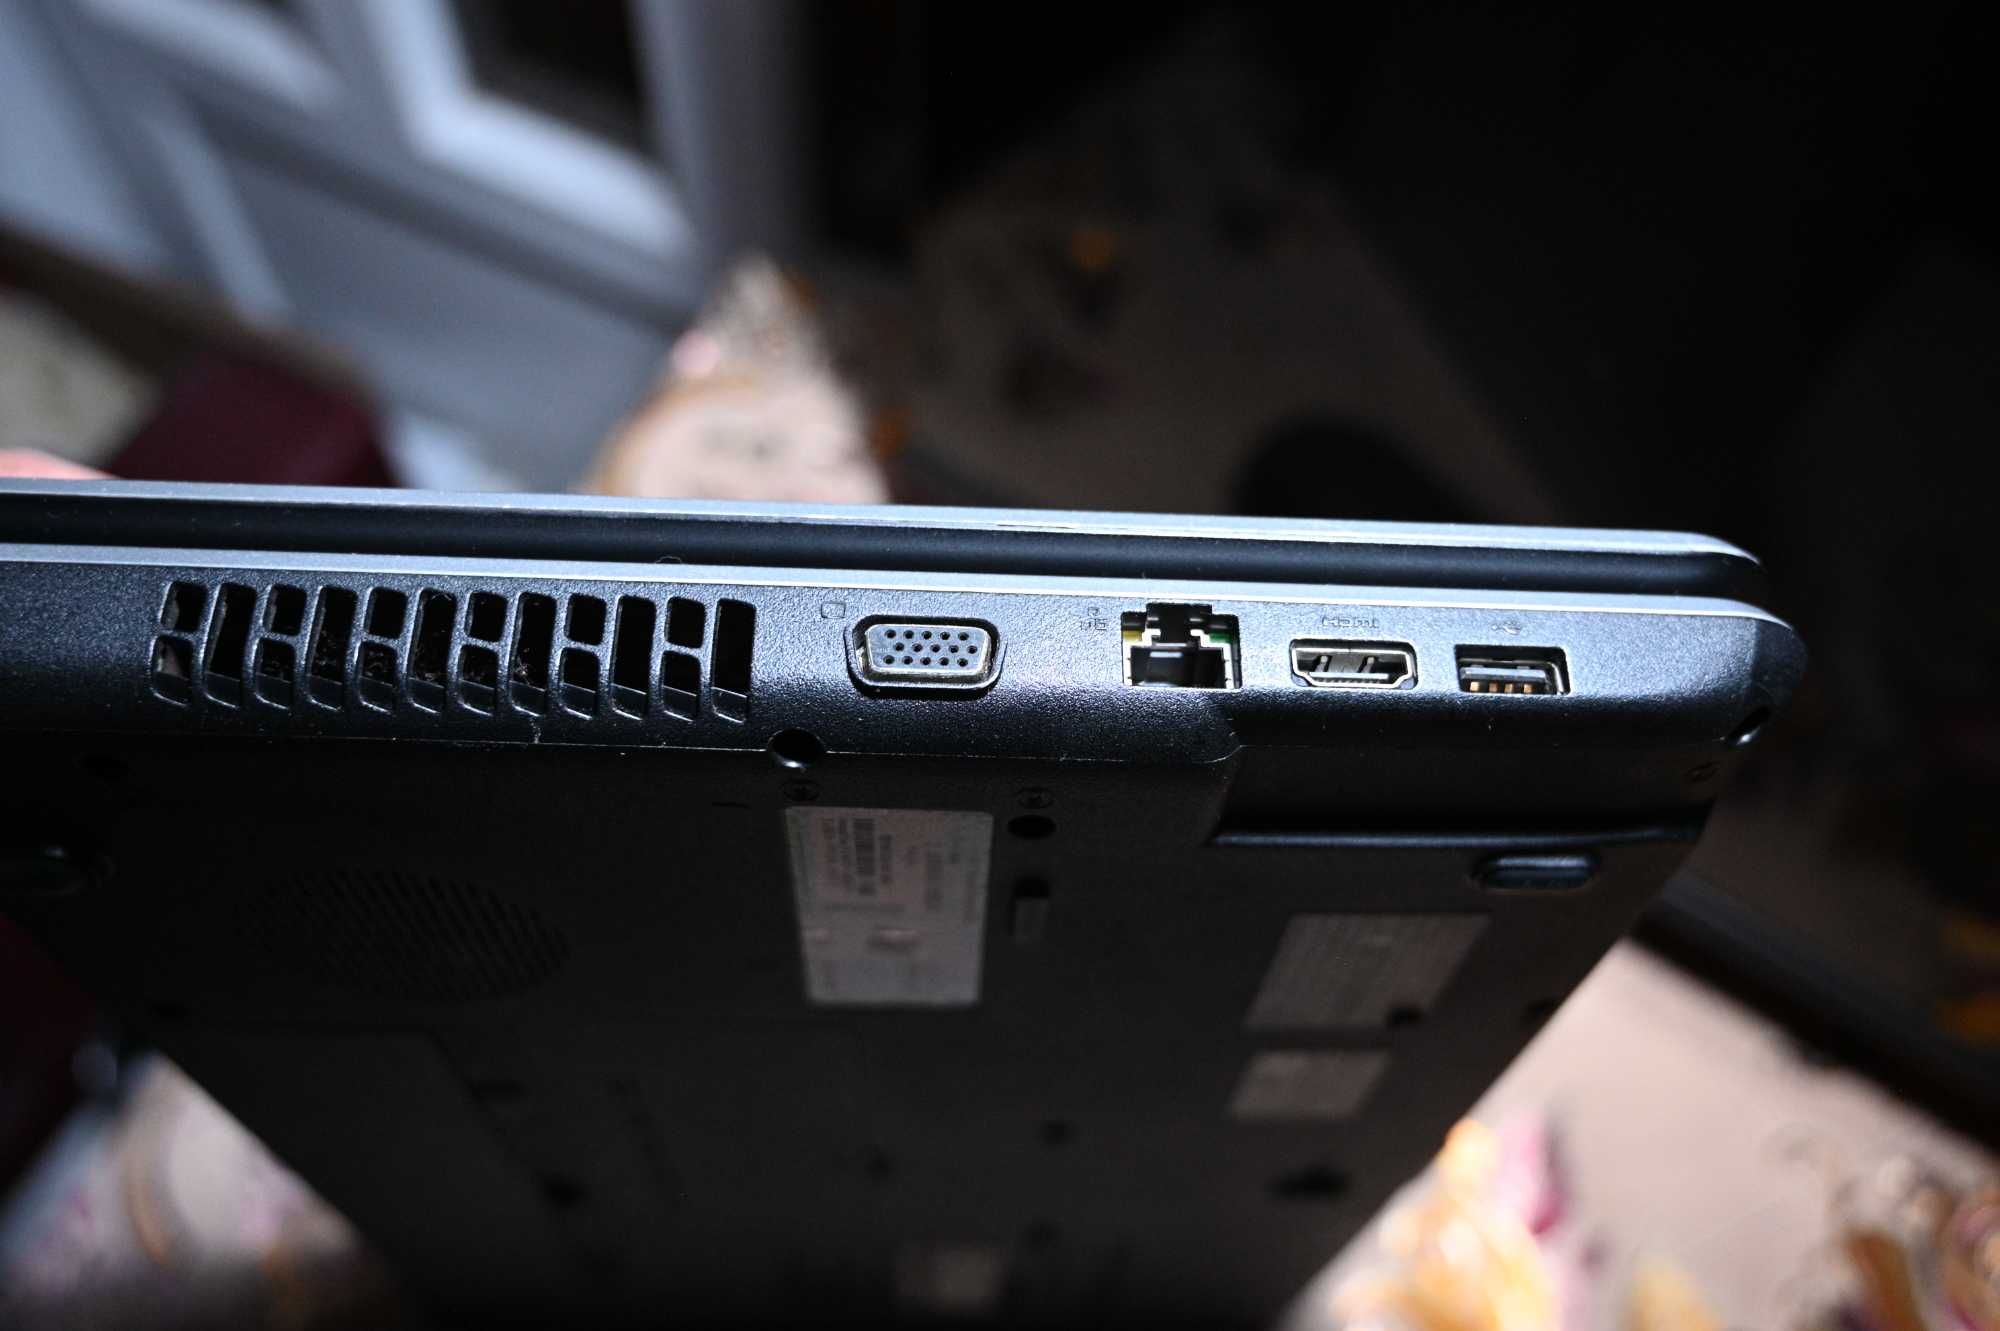 Laptop Tosiba model Satellite L450 D- Preț 250 lei ușor negociabil.